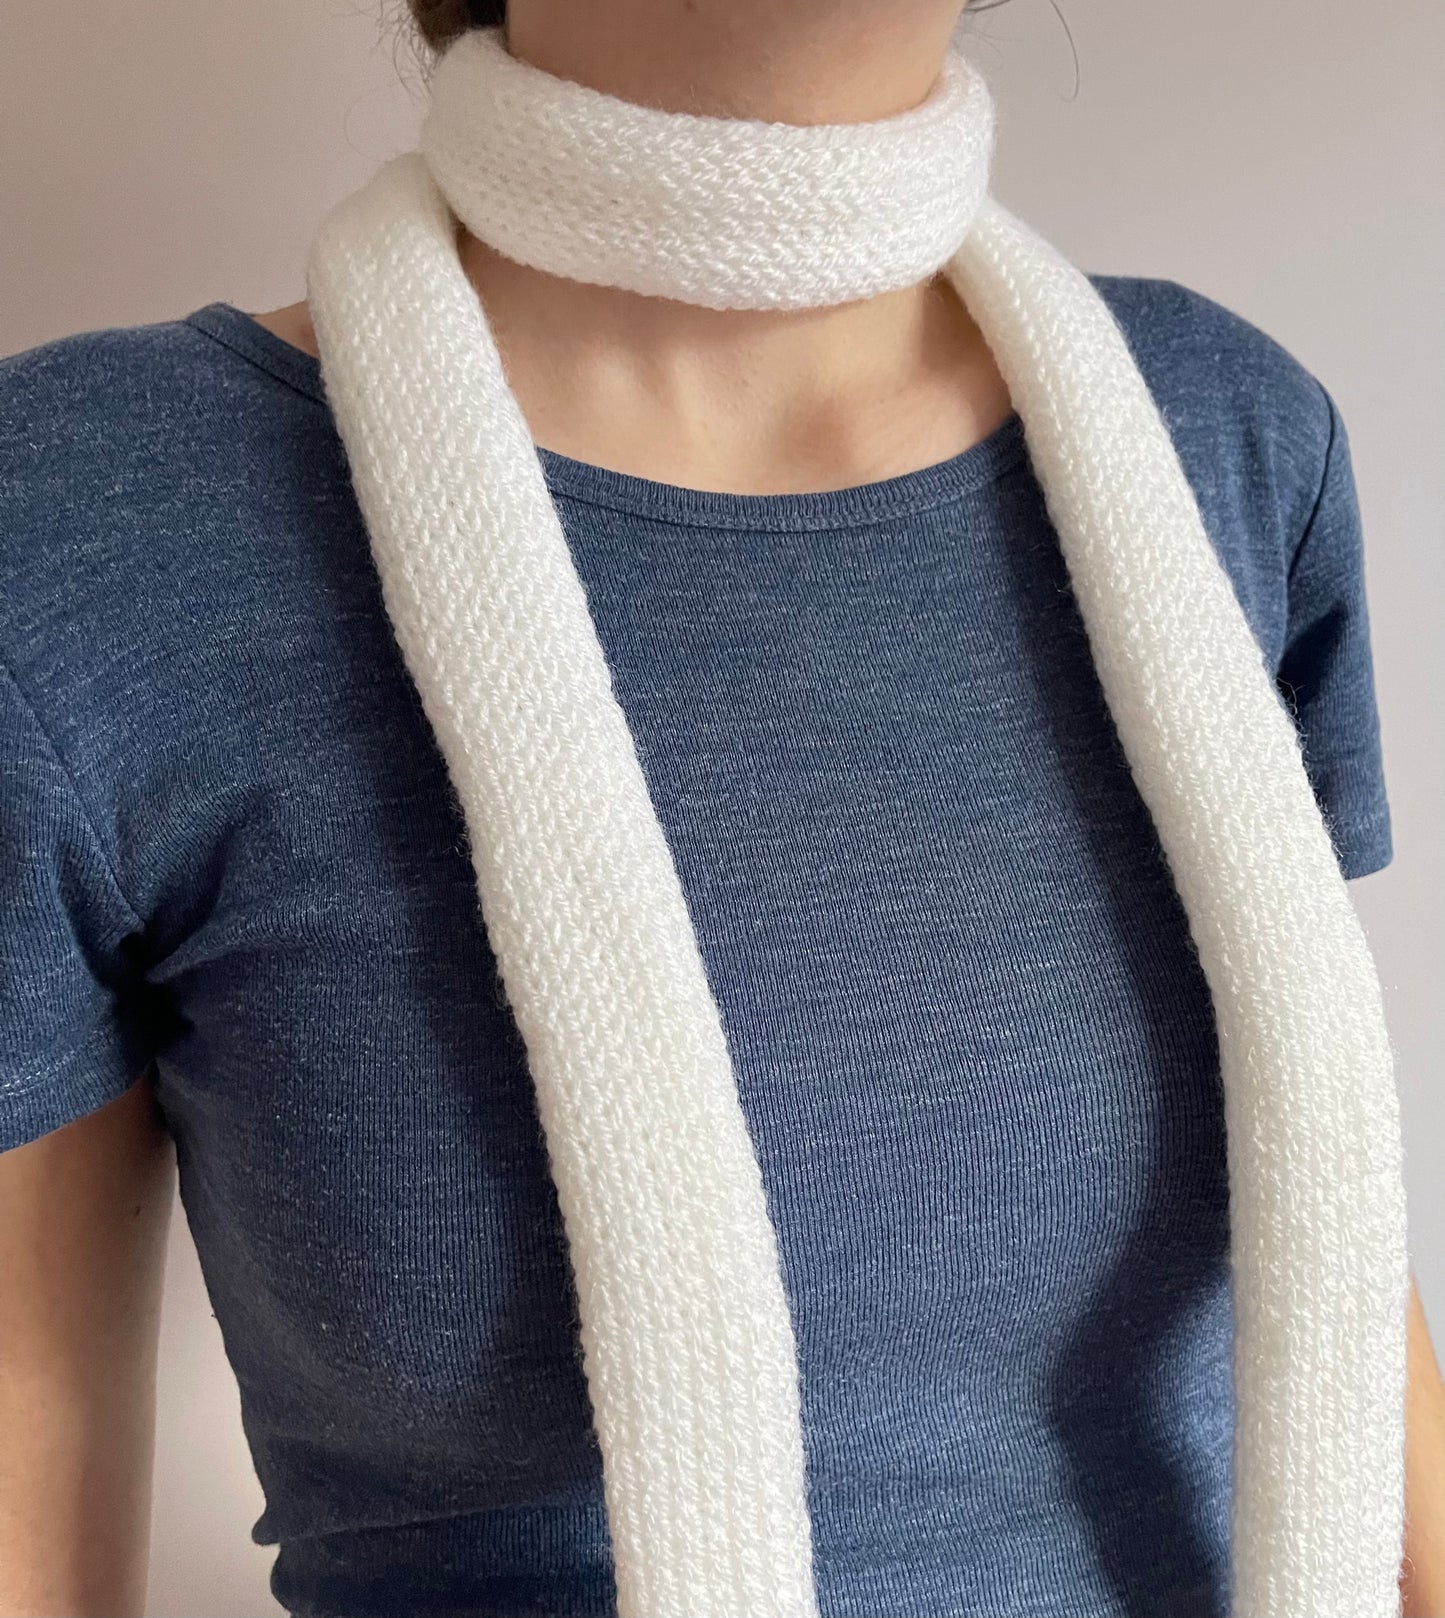 Handmade knitted skinny scarf in white